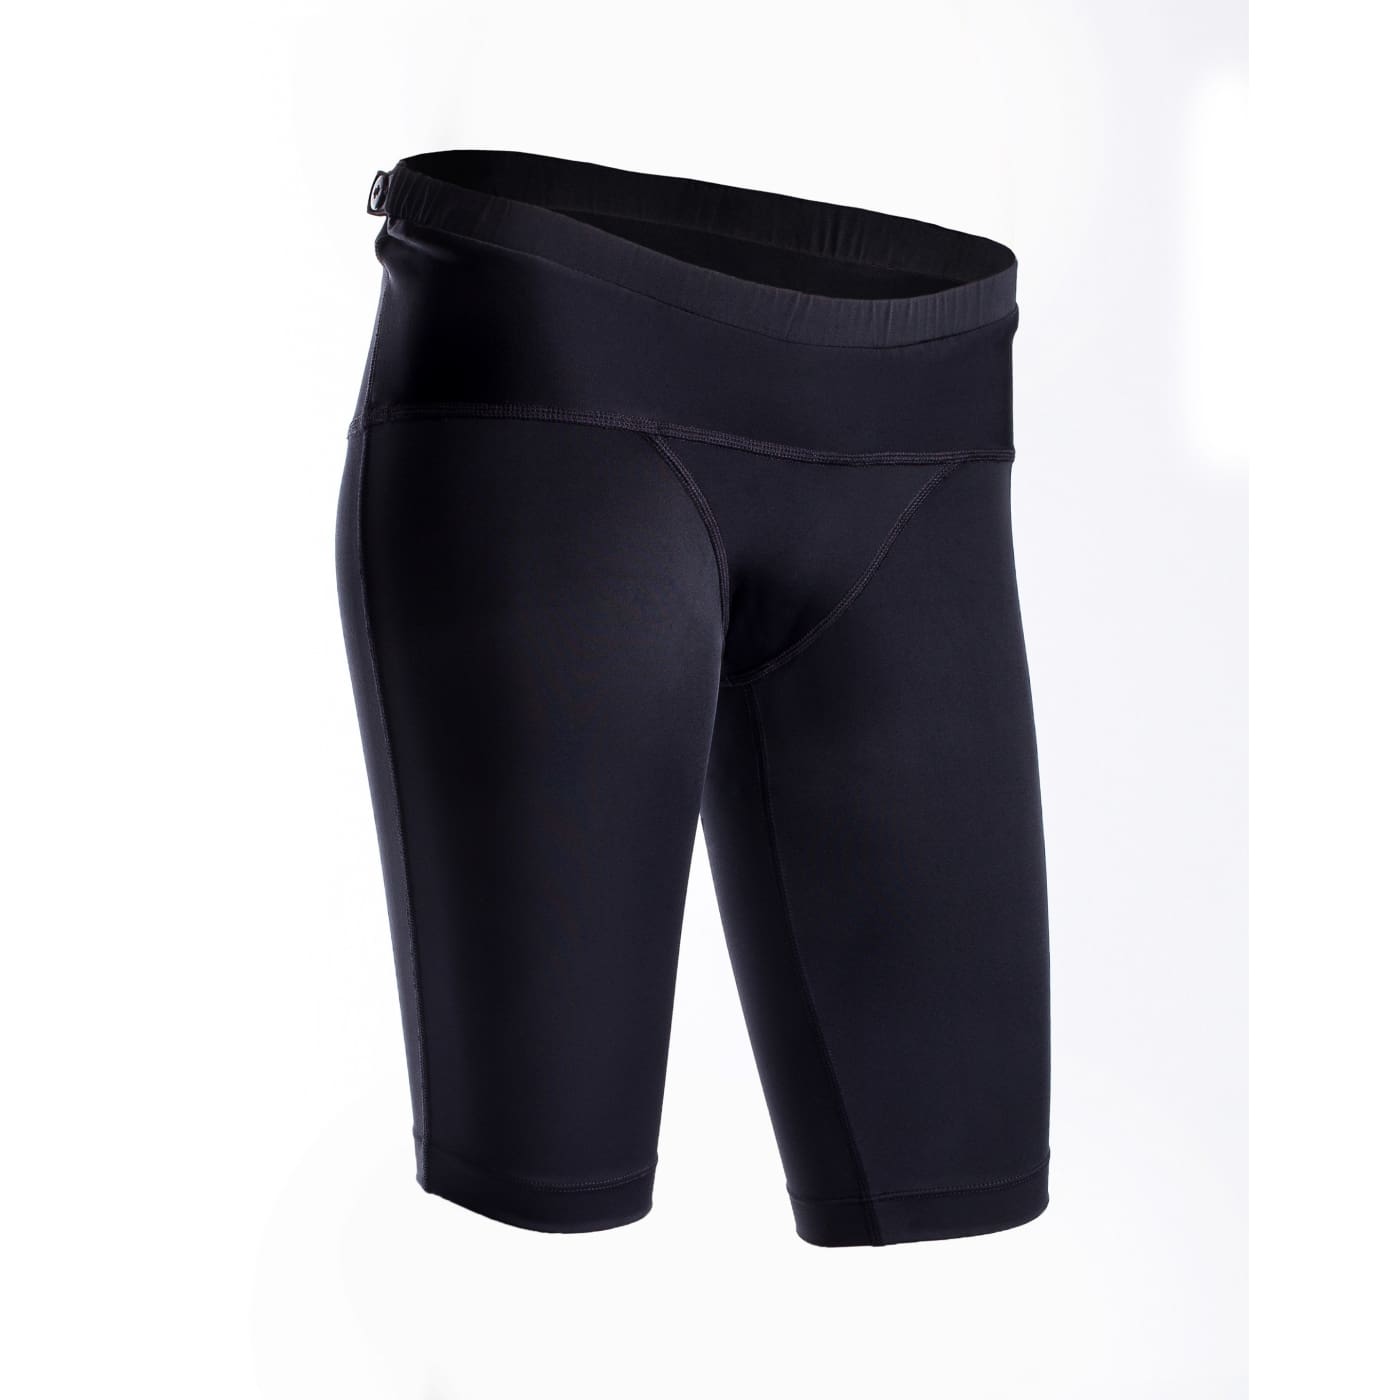 SRC Pregnancy Shorts - Black XXS - FOR MUM - MATERNITY SUPPORT GARMENTS (PRE/POST)